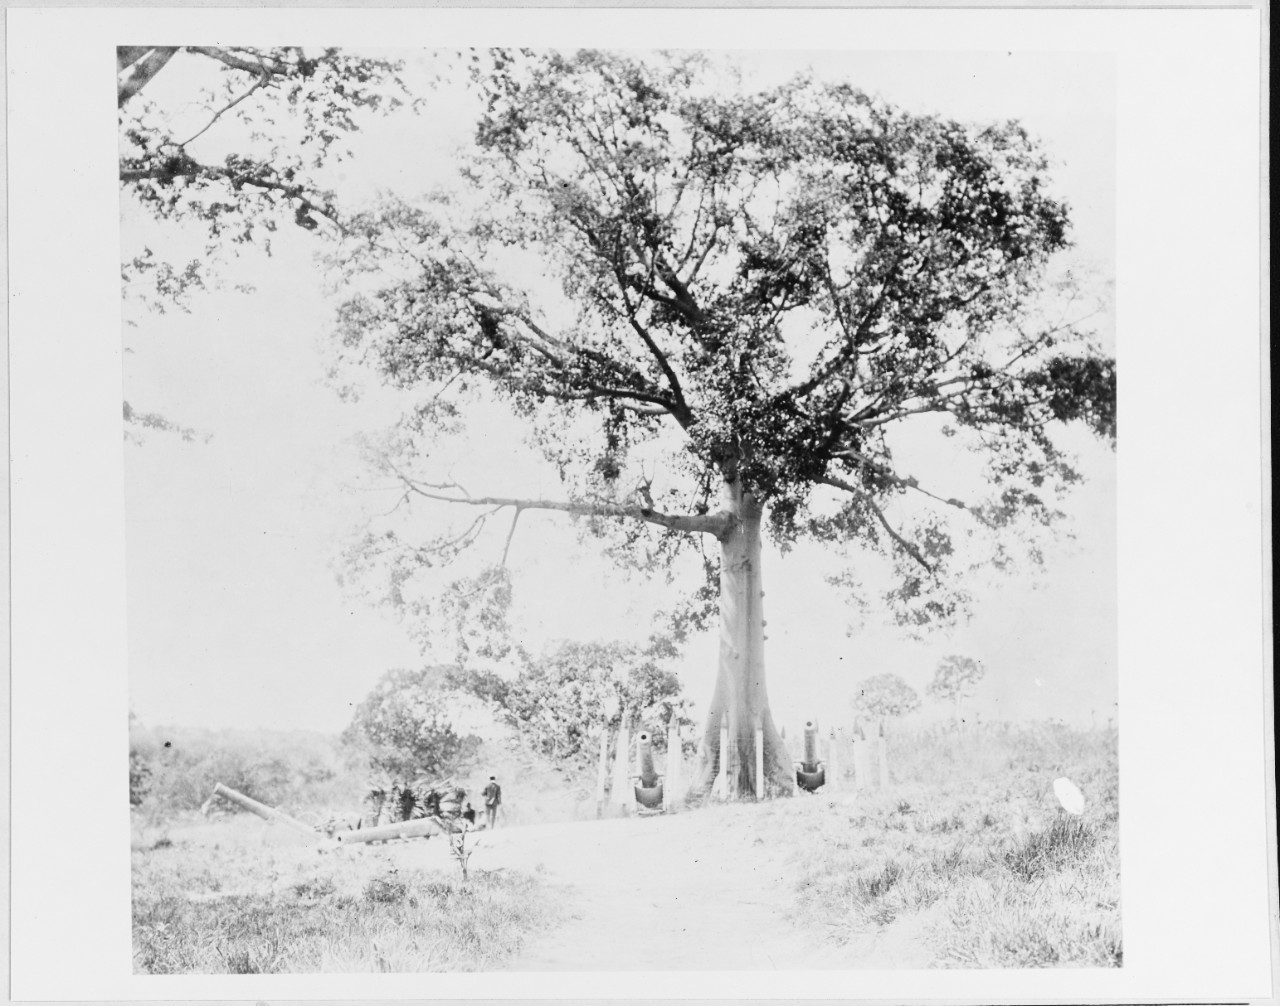 Surrender Tree near Santiago, Cuba, 1898.